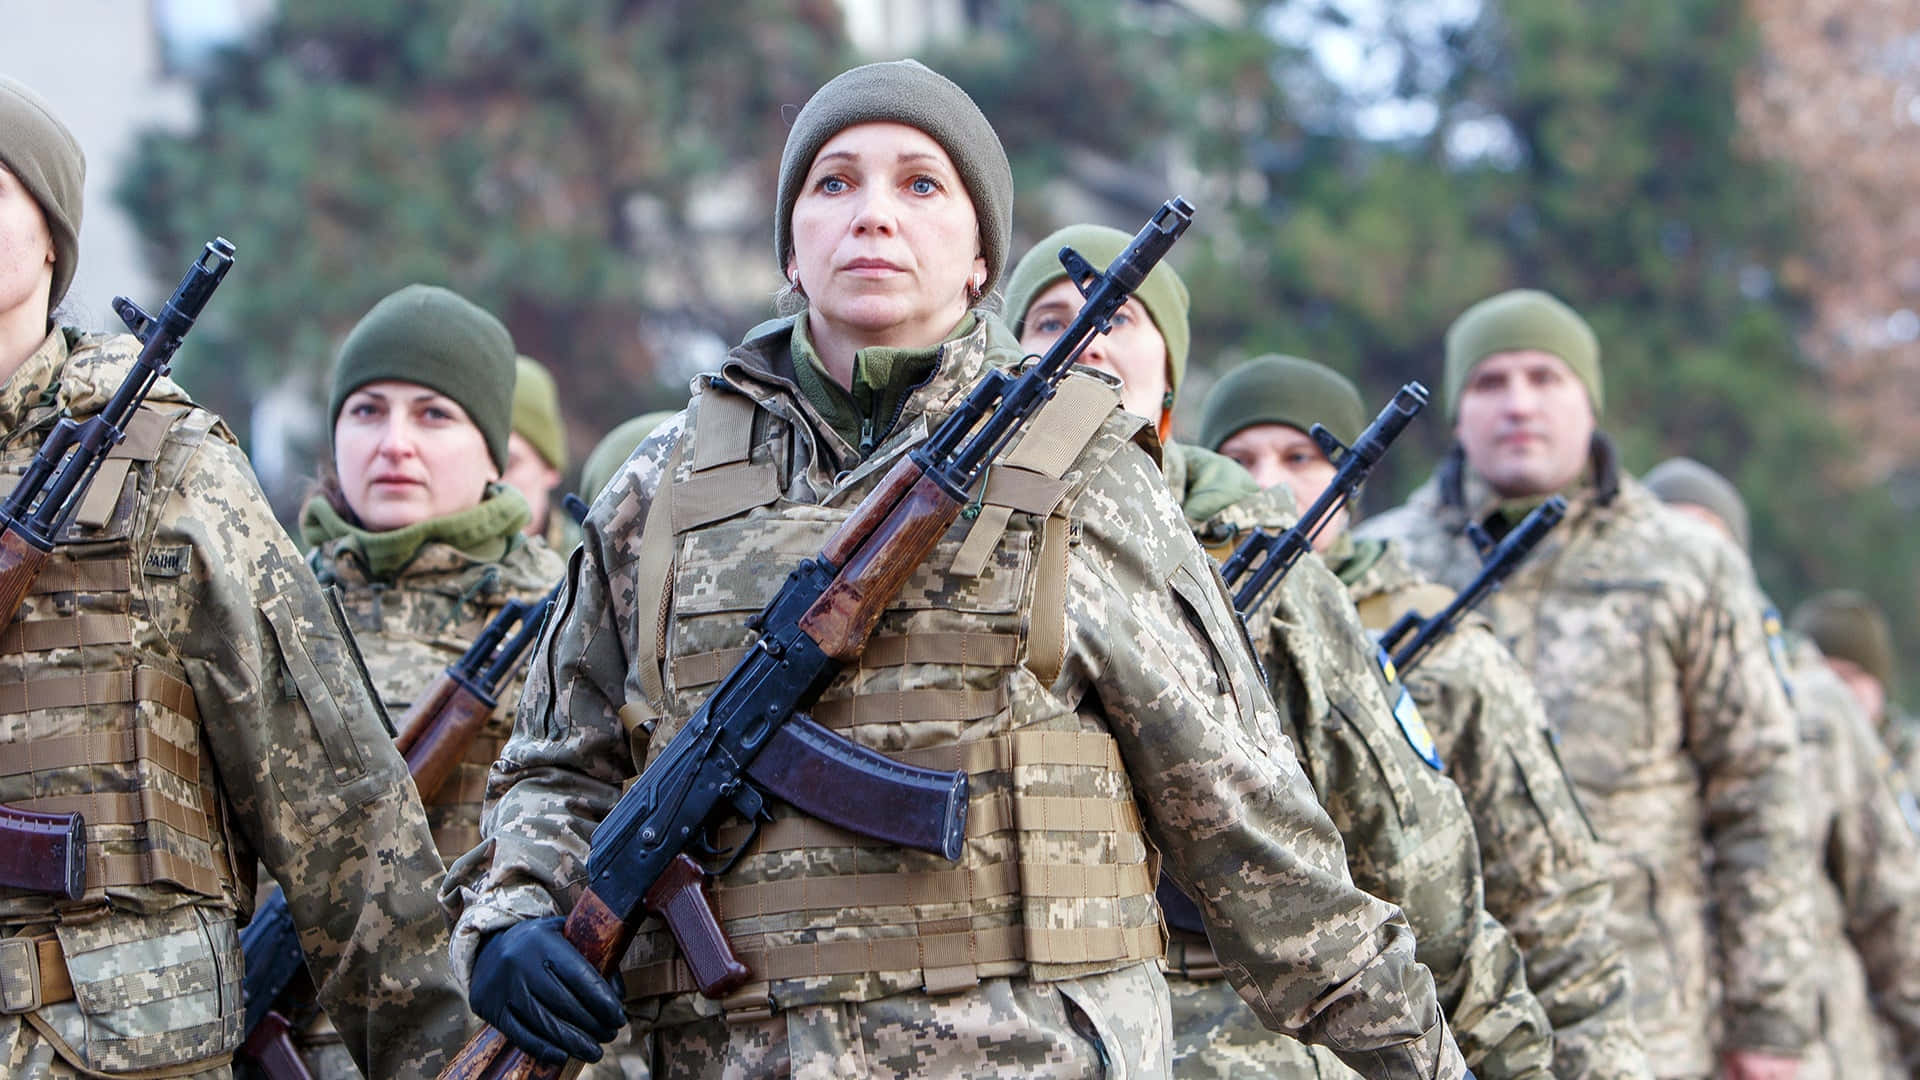 Ukrainian Army Soldiers In Uniform